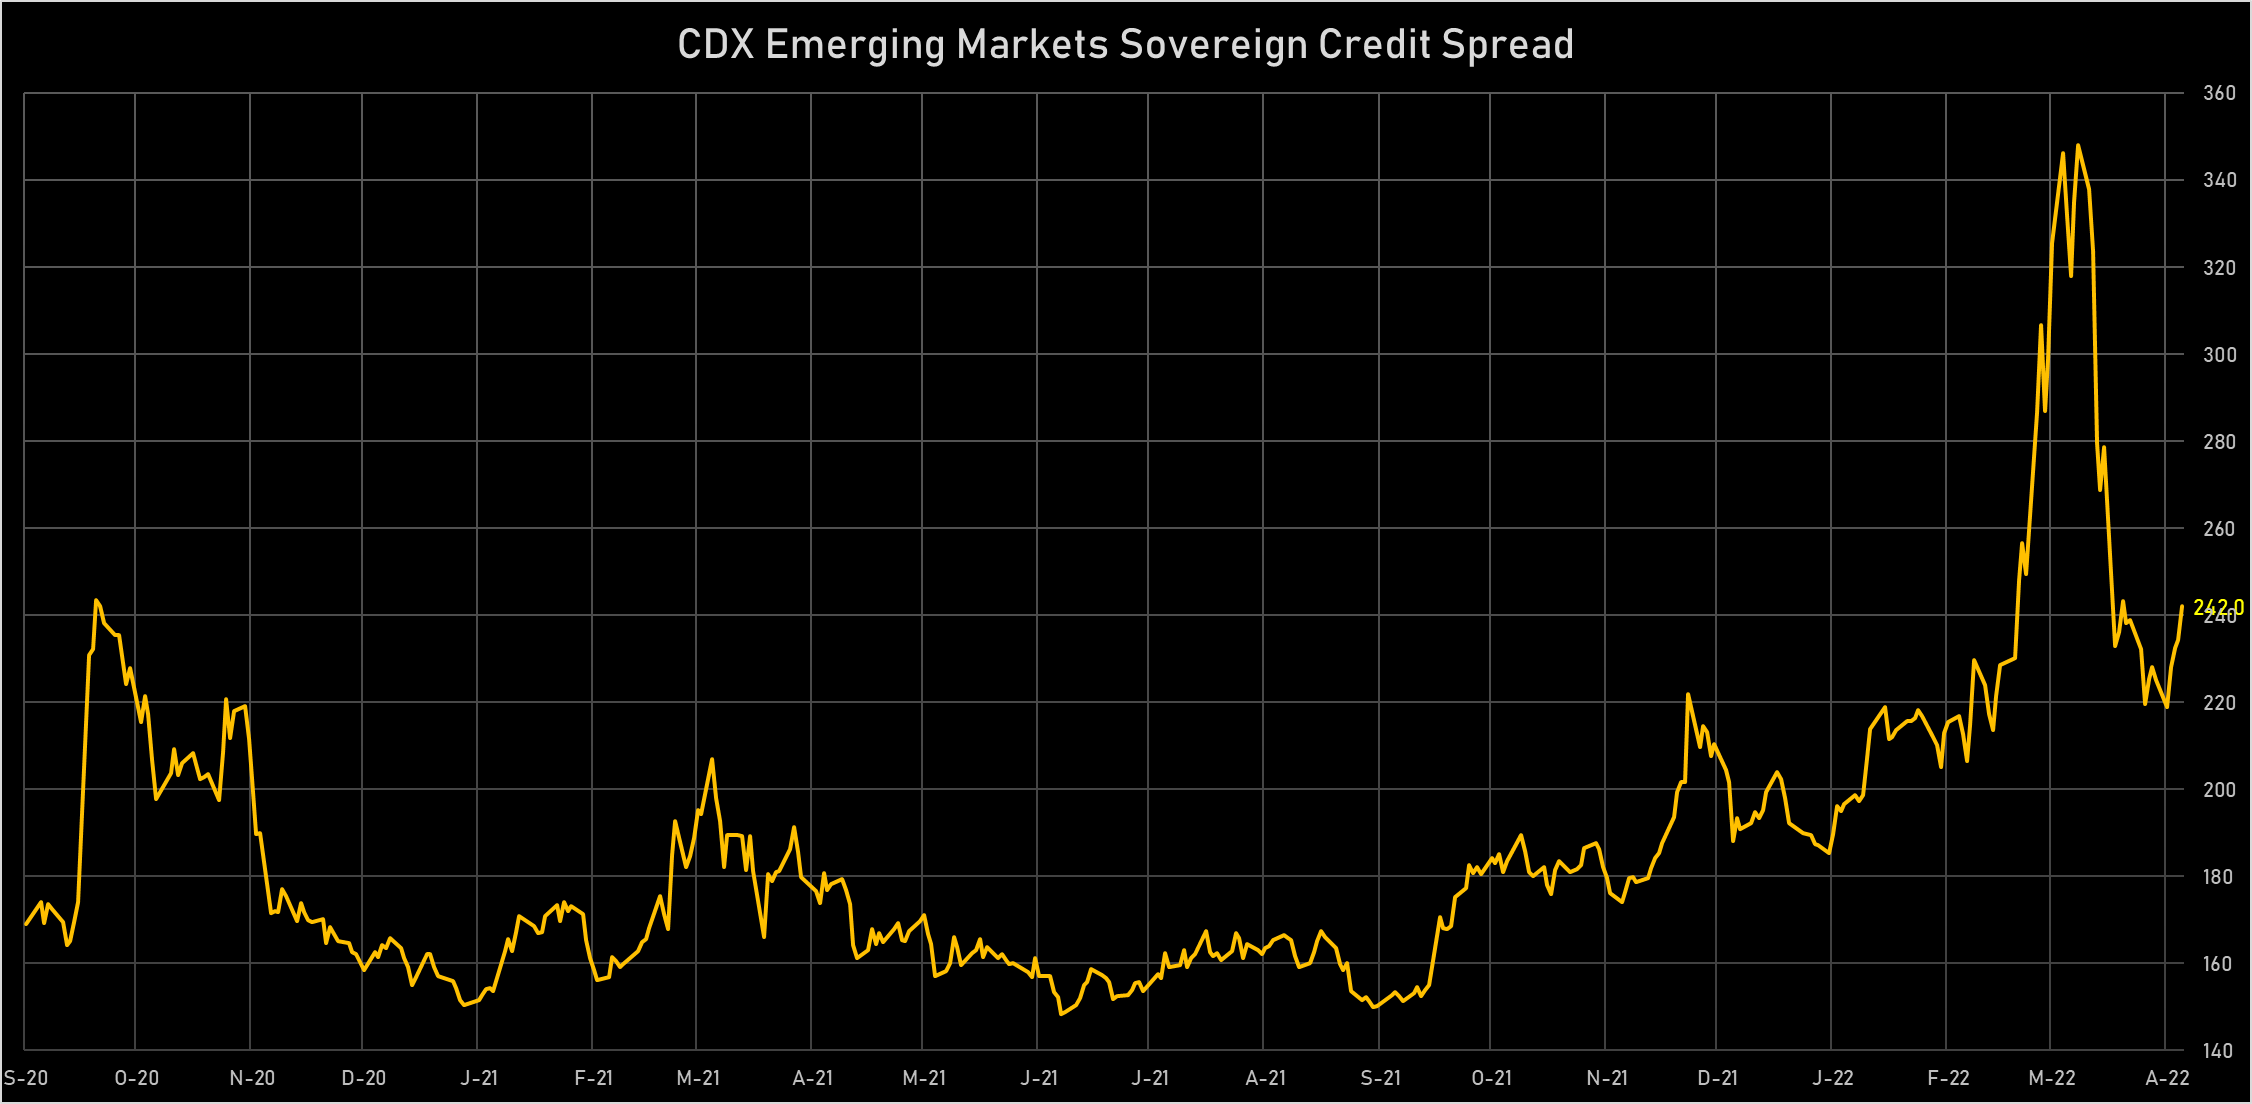 CDX Emerging Market Sovereign Credit Spread 5Y | Sources: phipost.com, Refinitiv data